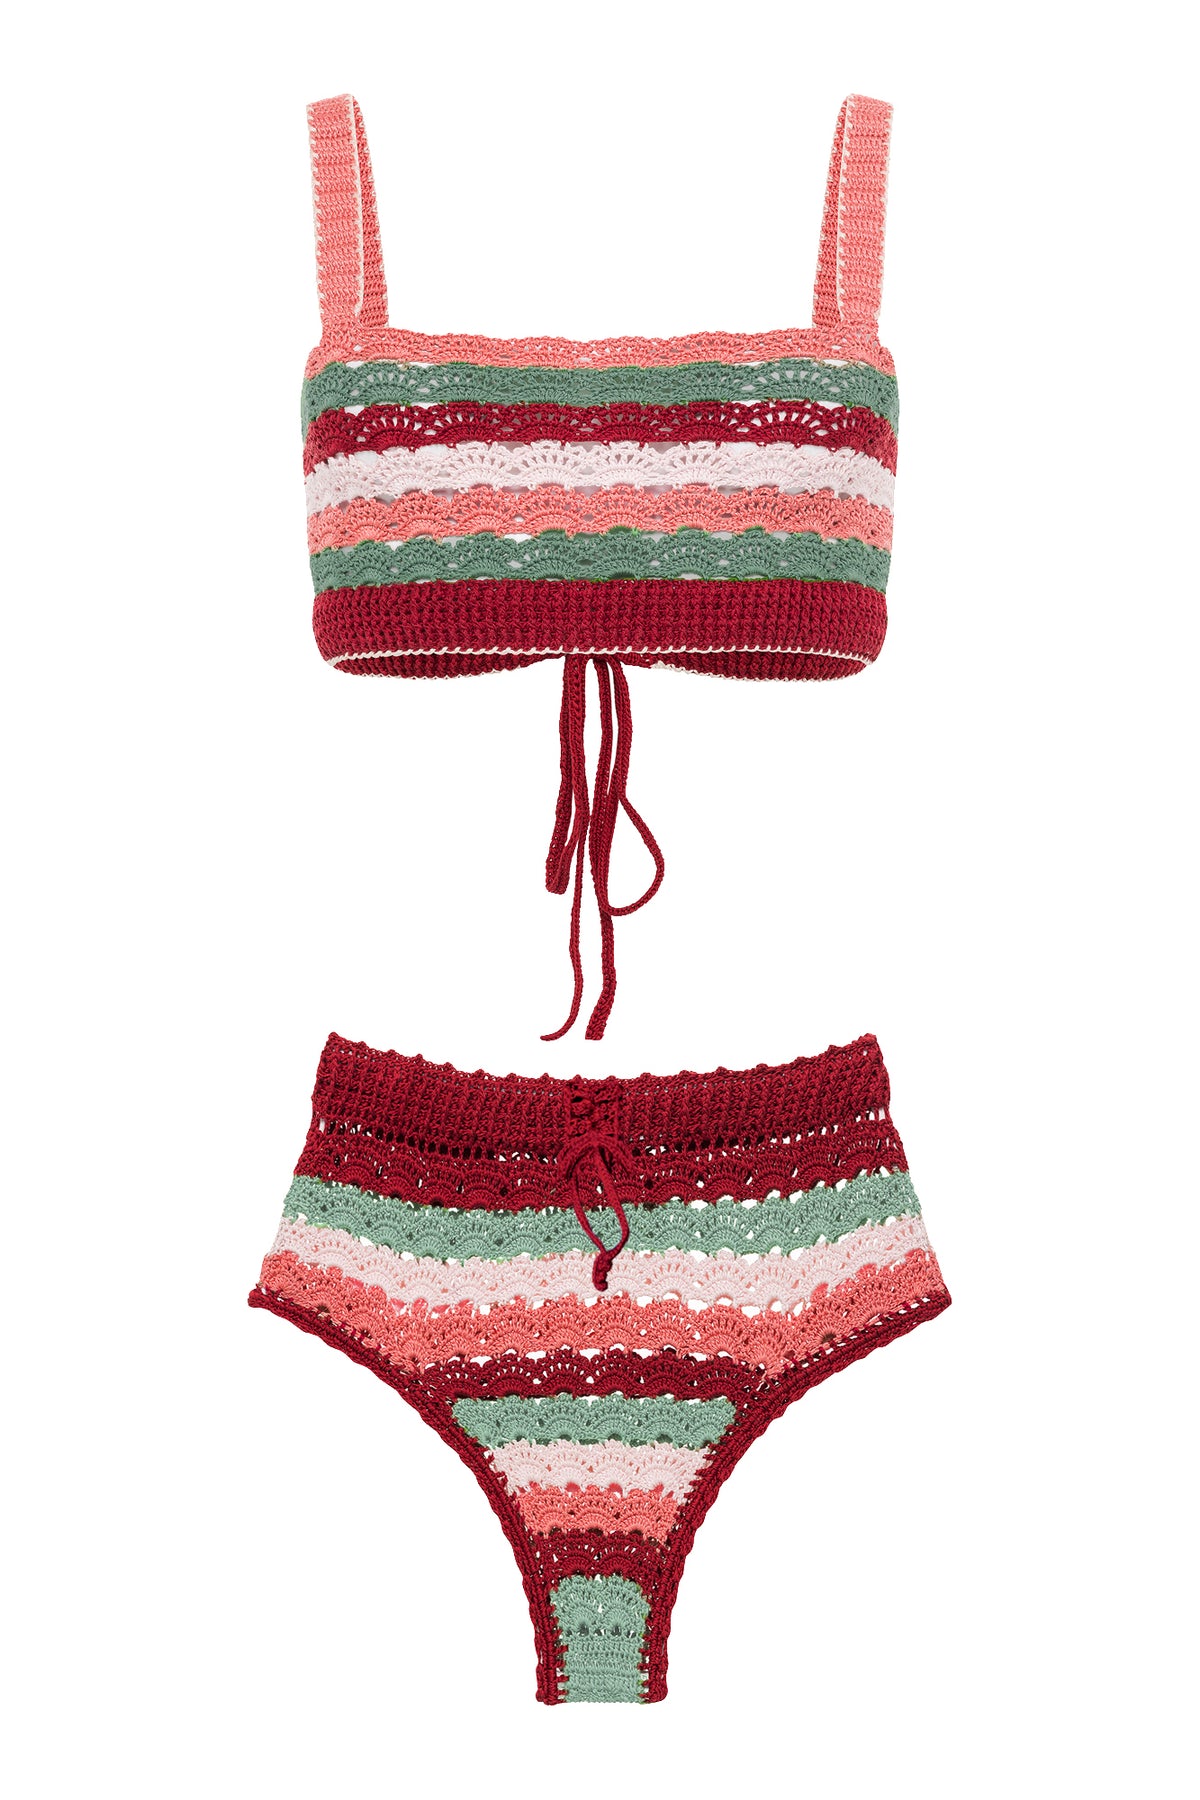 Carolina K Crochet Bikini Set